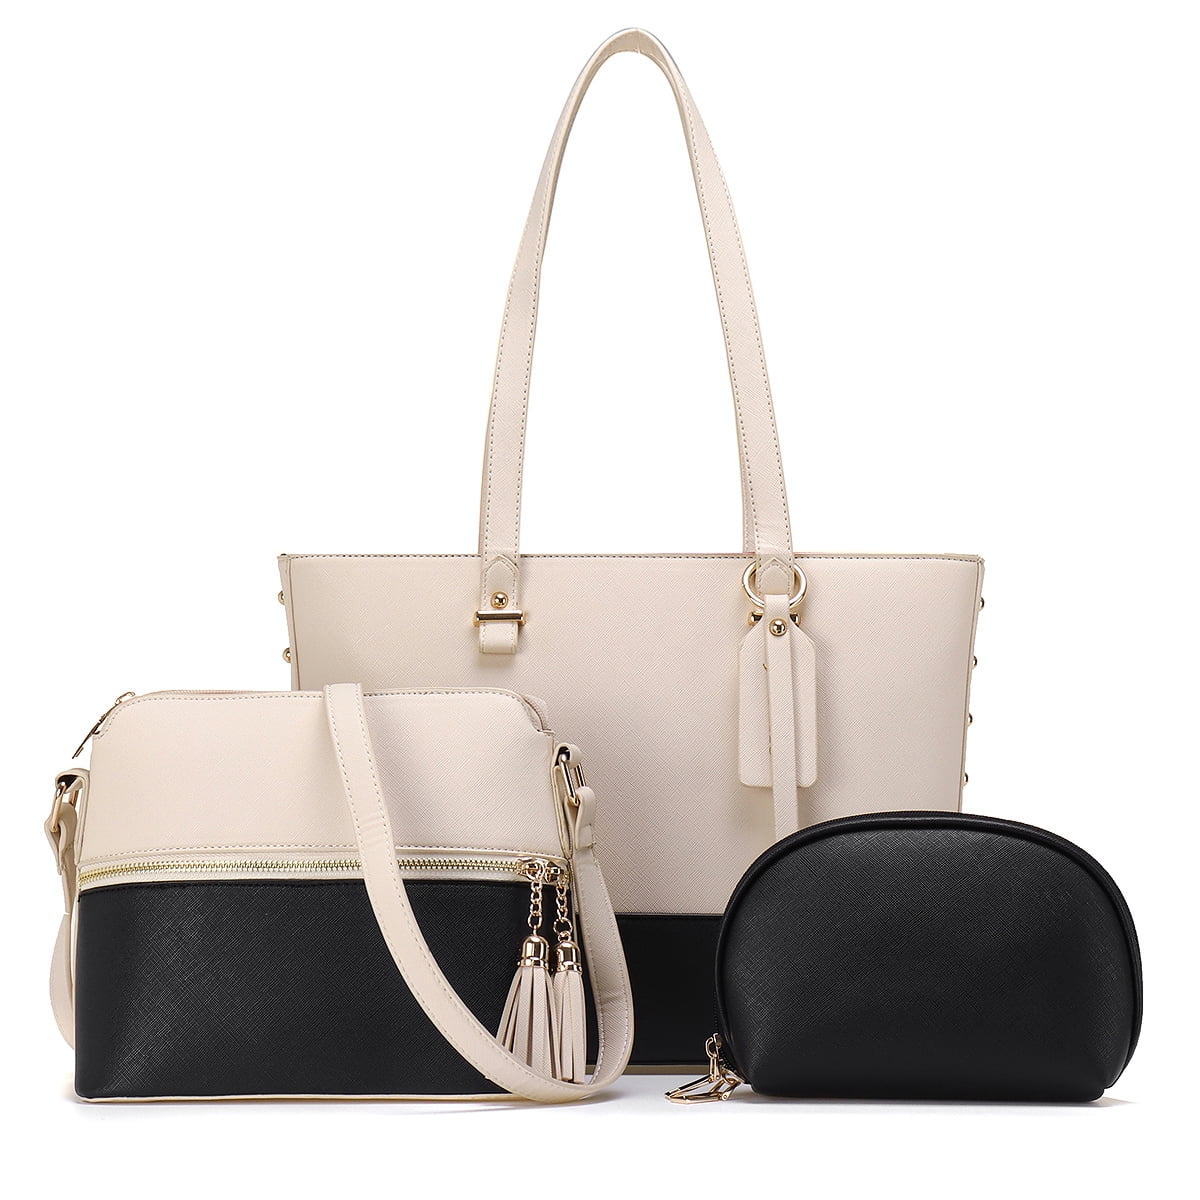 Women Fashion Handbags Tote Shoulder Bags Top Handle Satchel Purse Vegan Leather Handbags Set 3pcs 